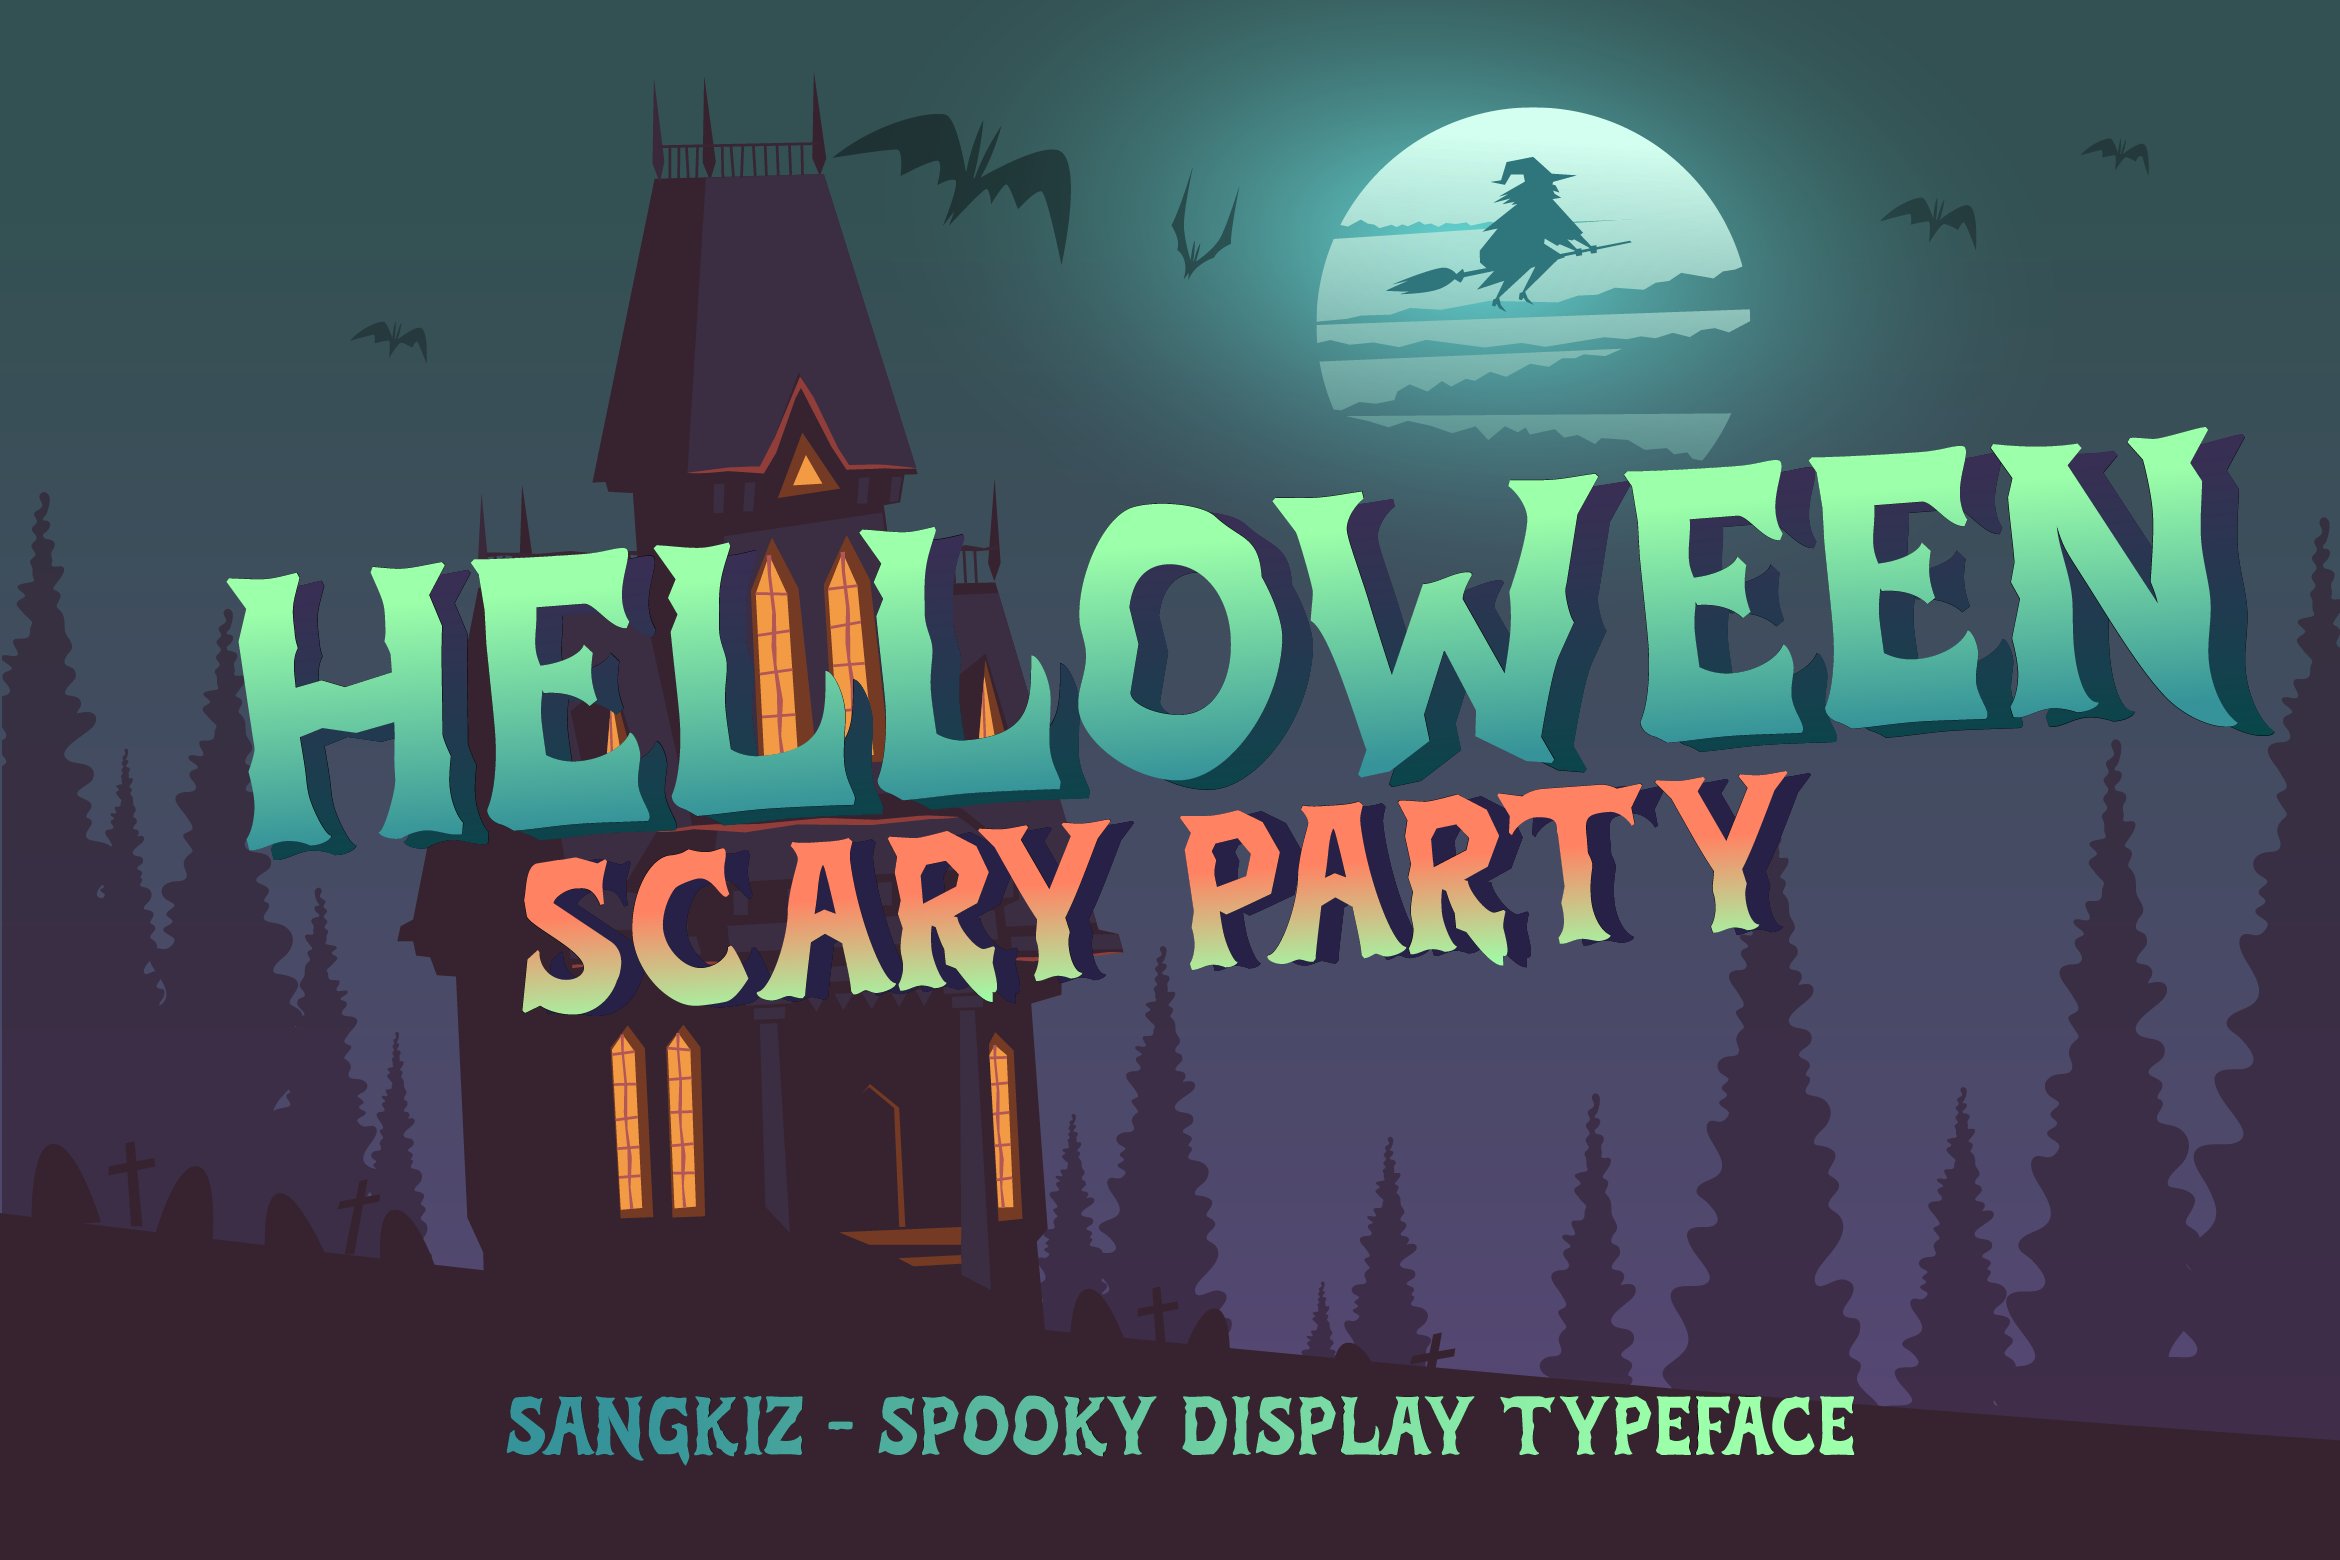 Sangkiz - Spooky Display Typeface preview image.